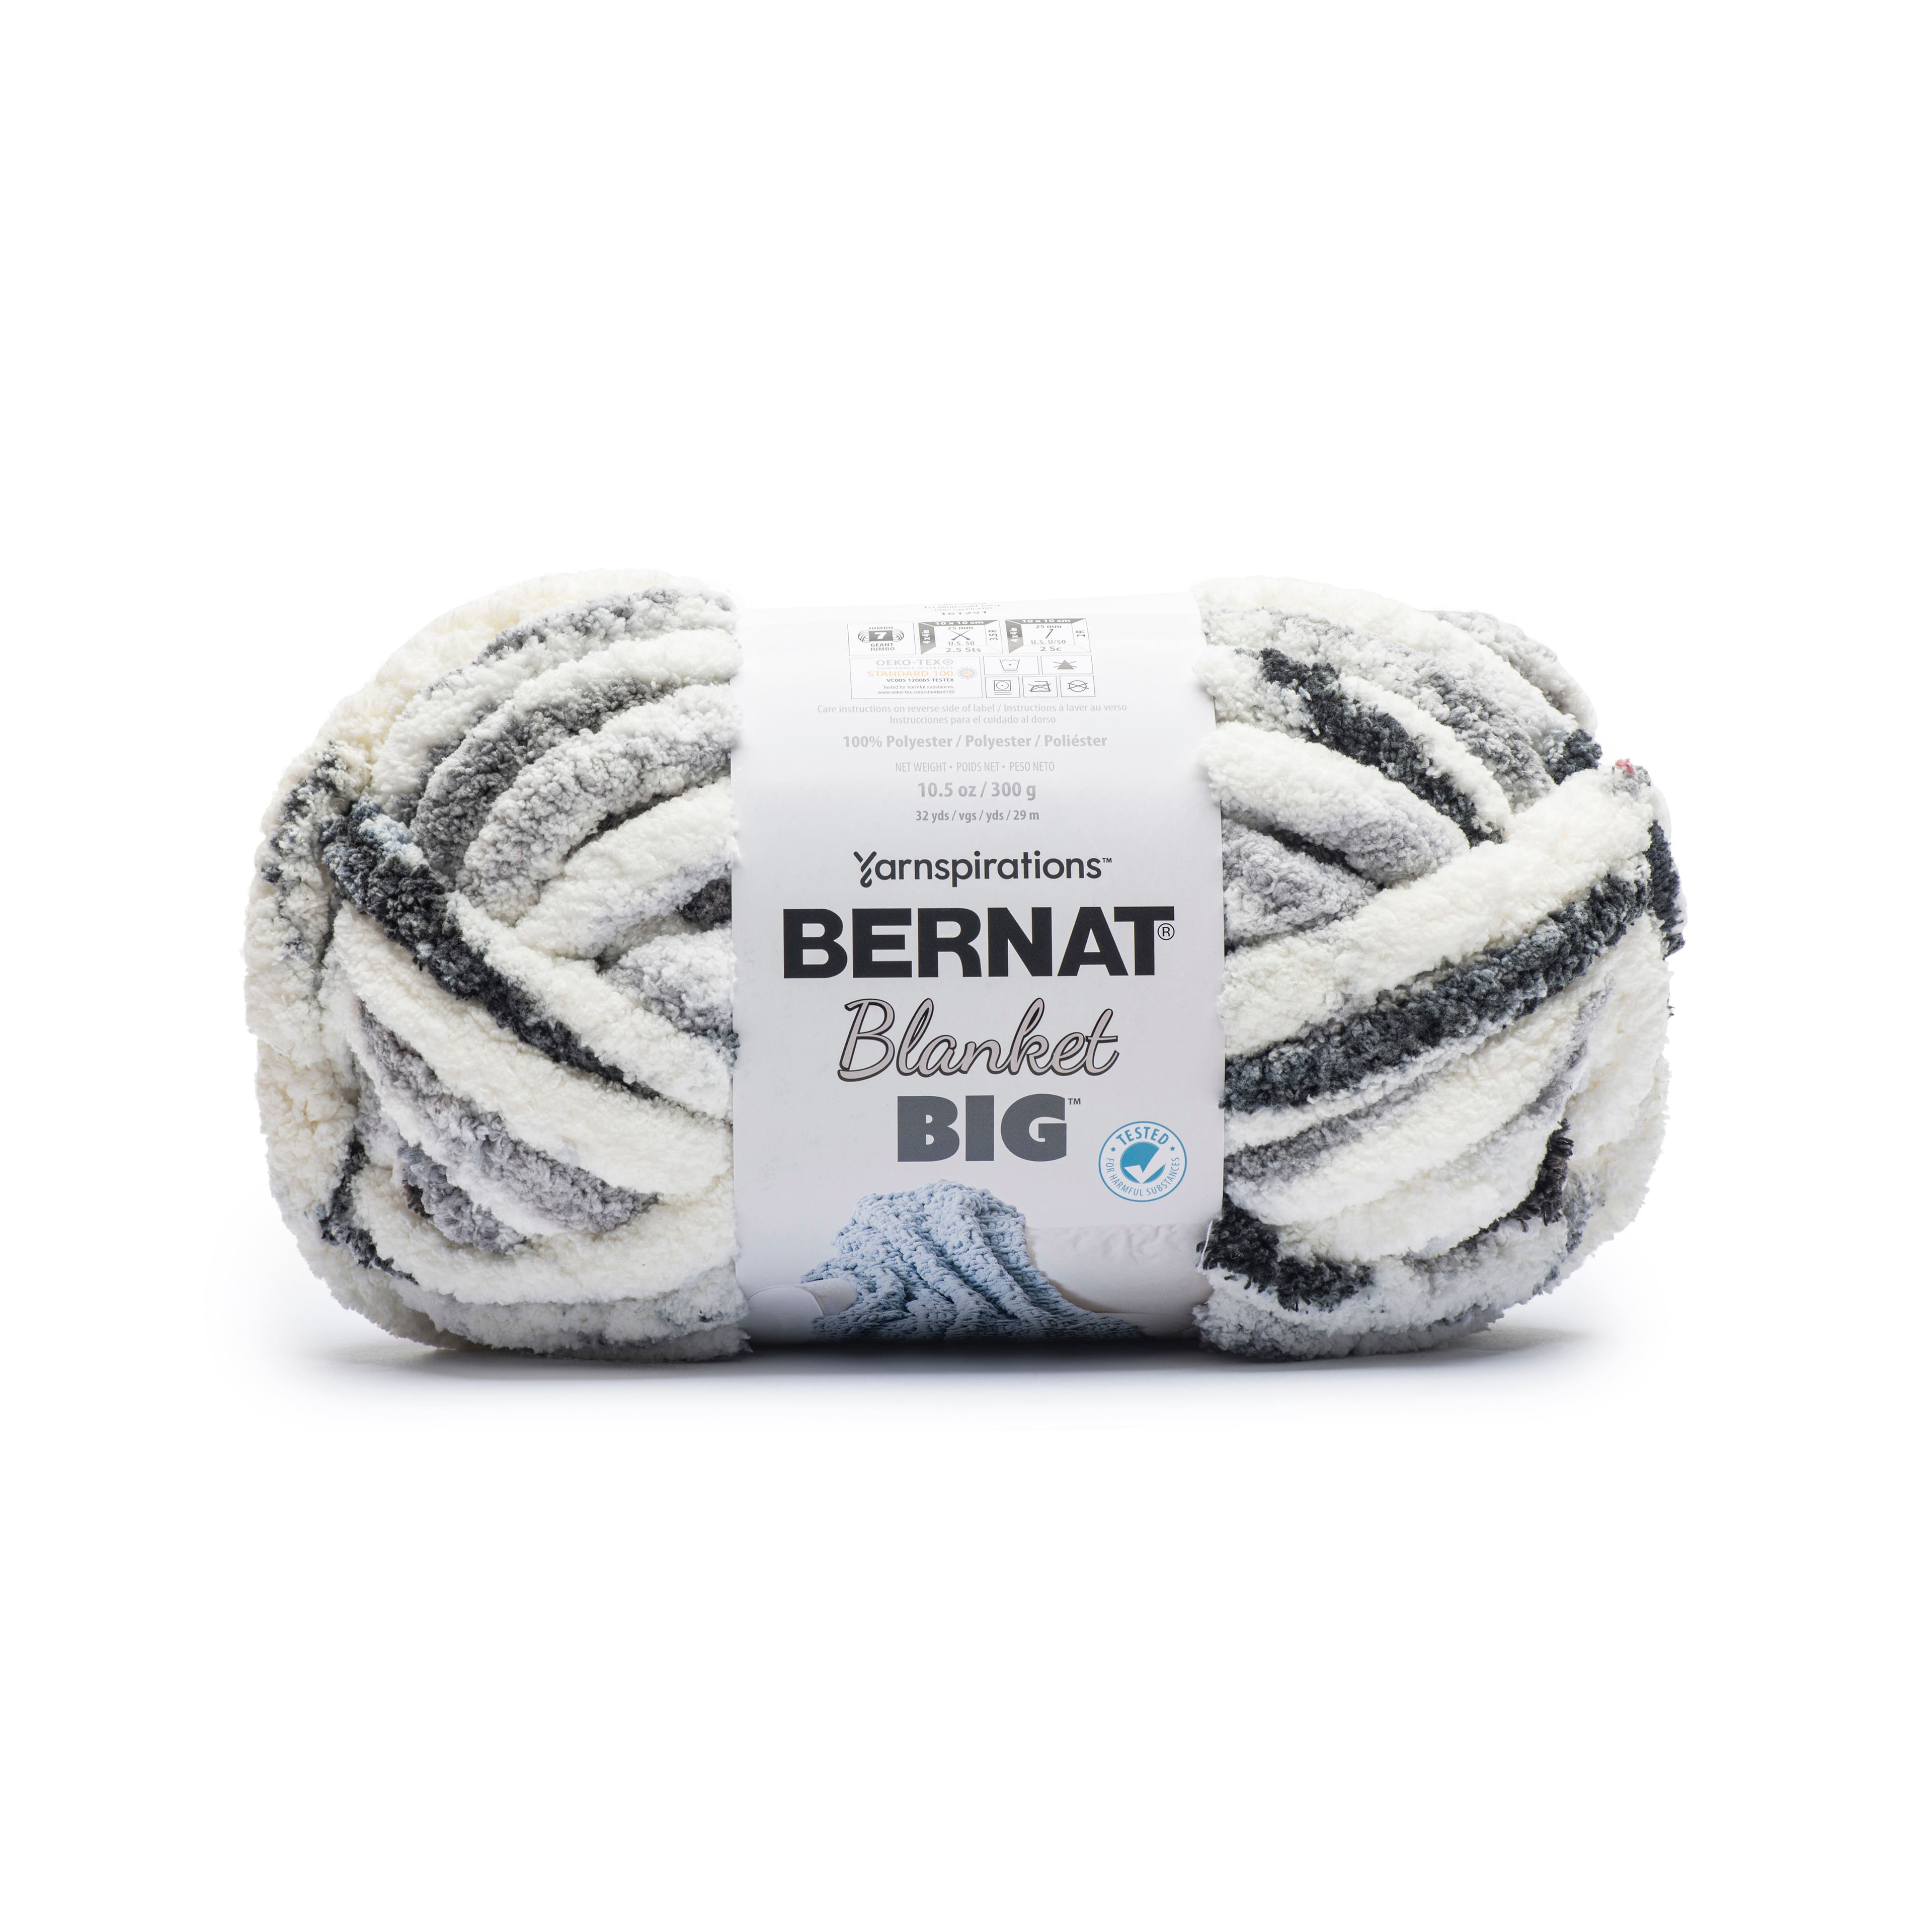 Bernat Blanket Big Ball Yarn-Coal, 1 count - Smith's Food and Drug